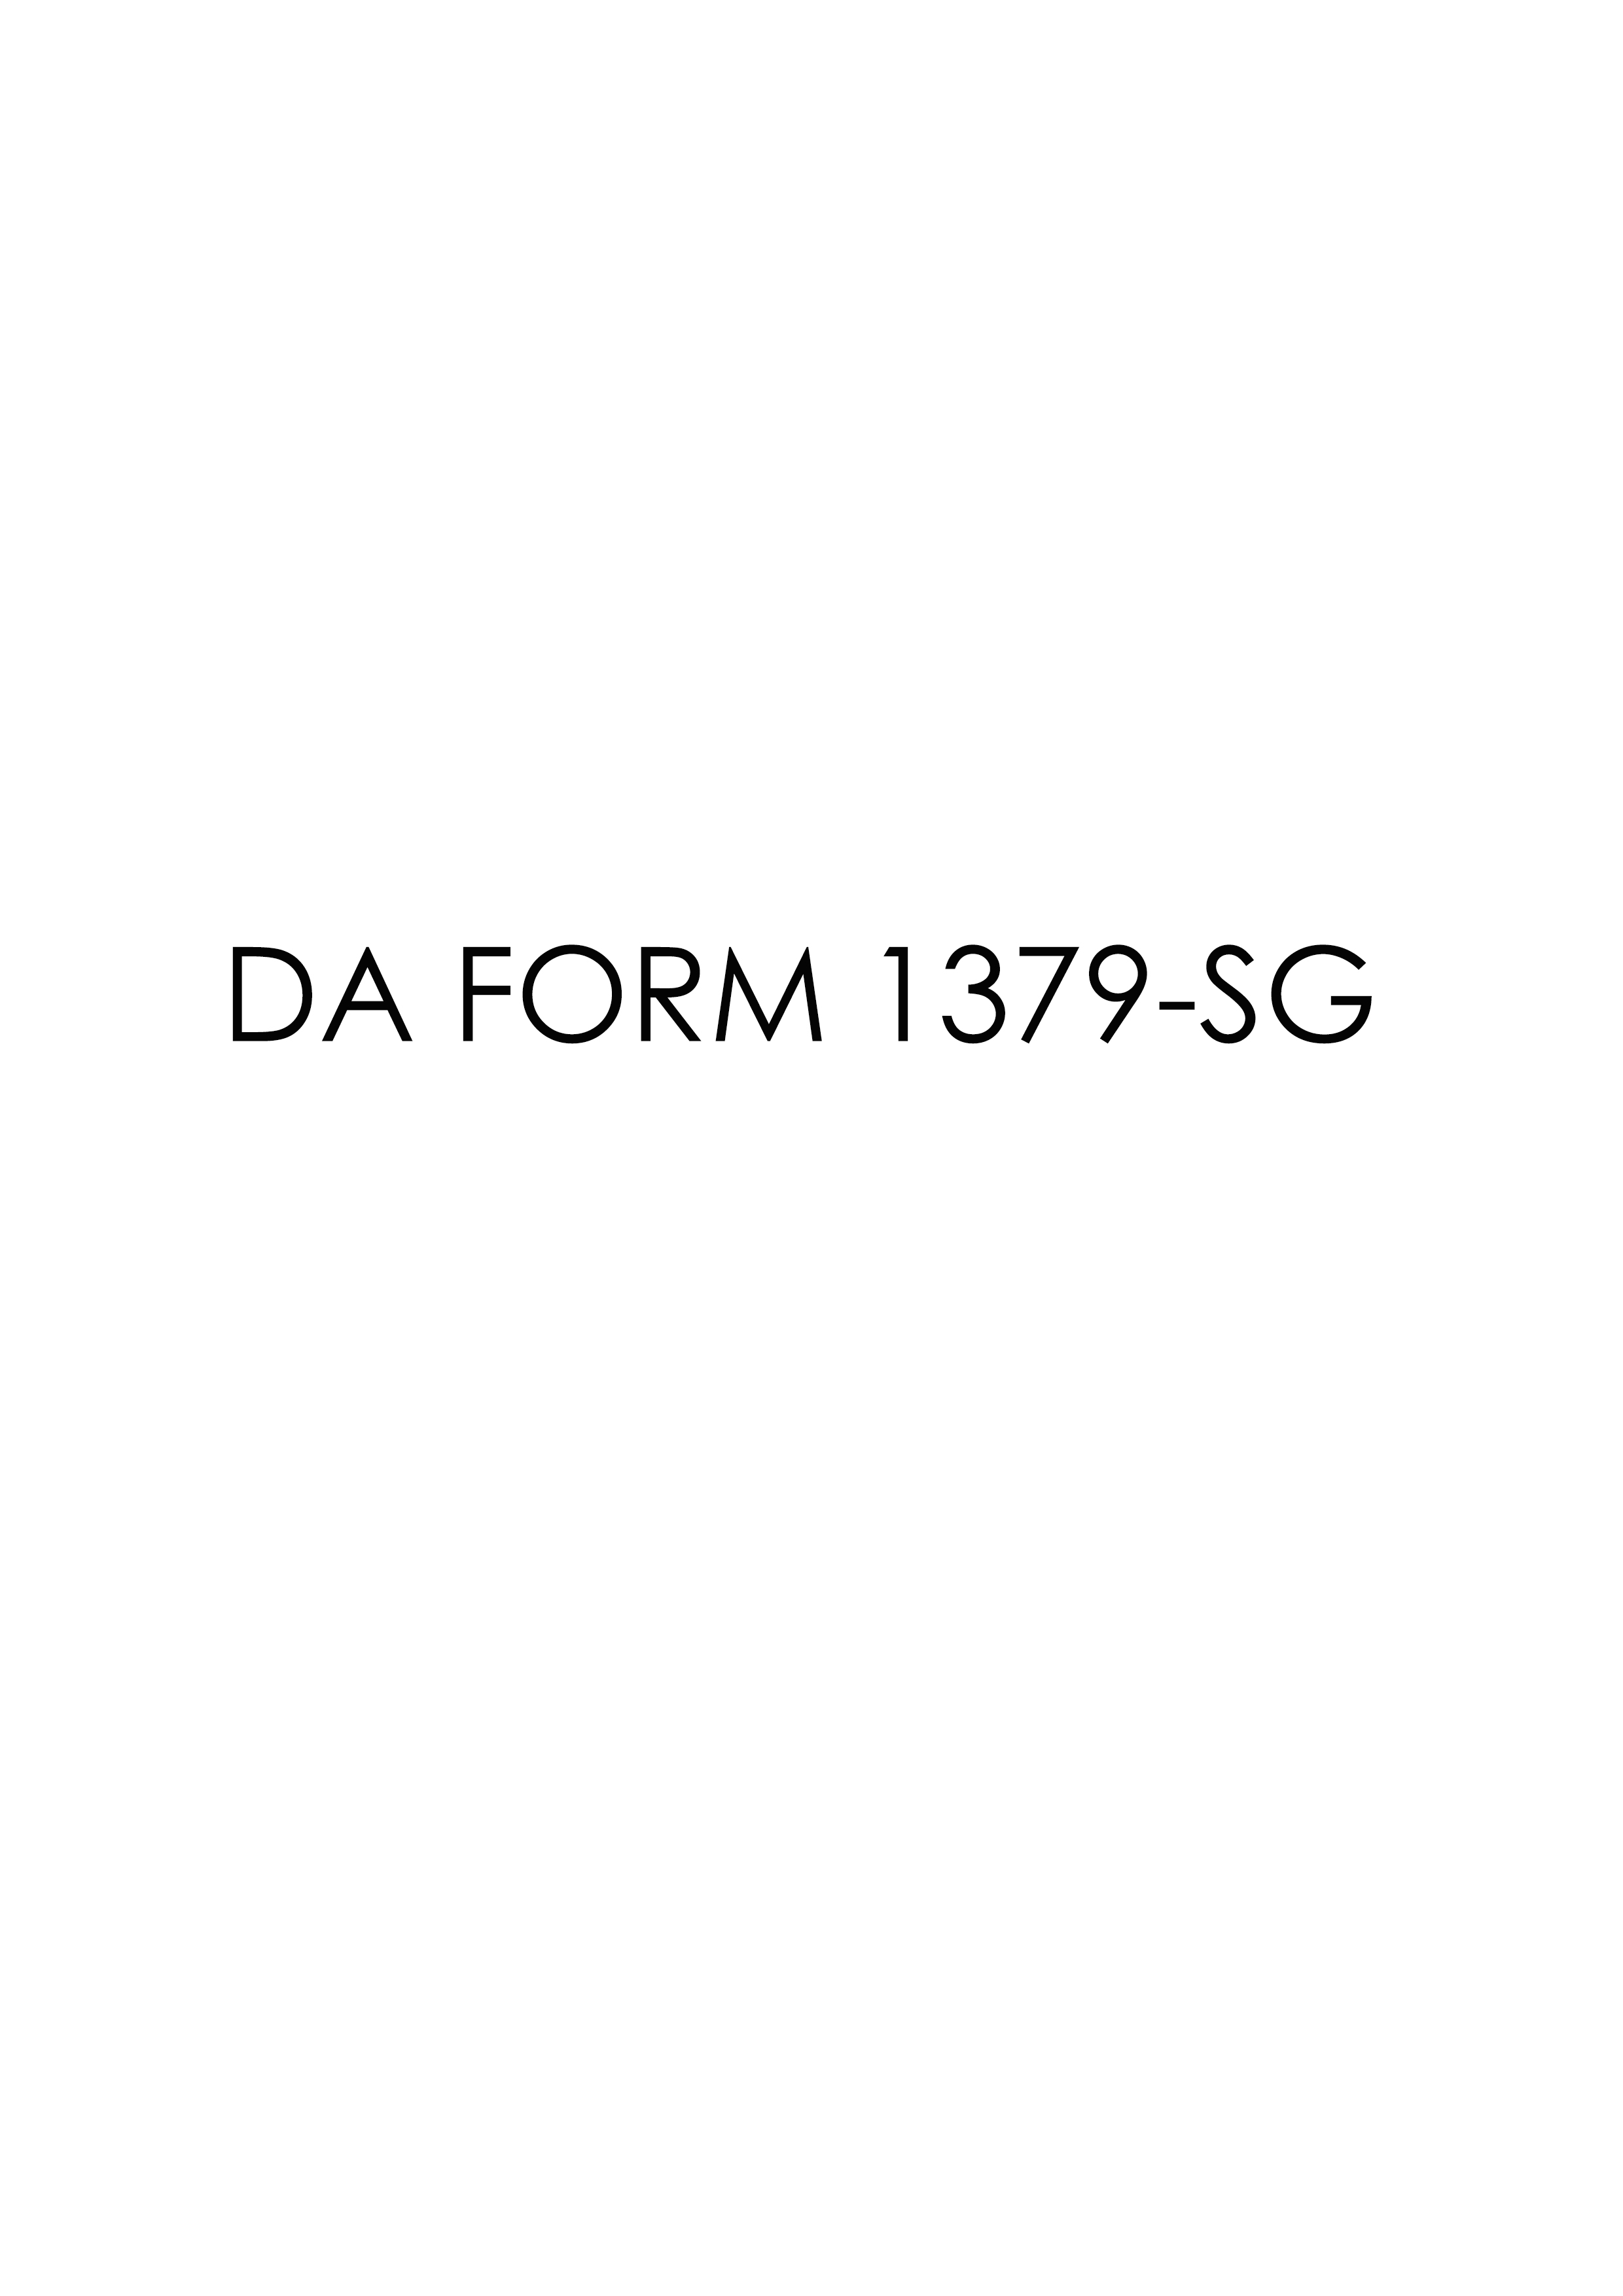 Download da 1379-SG Form Free